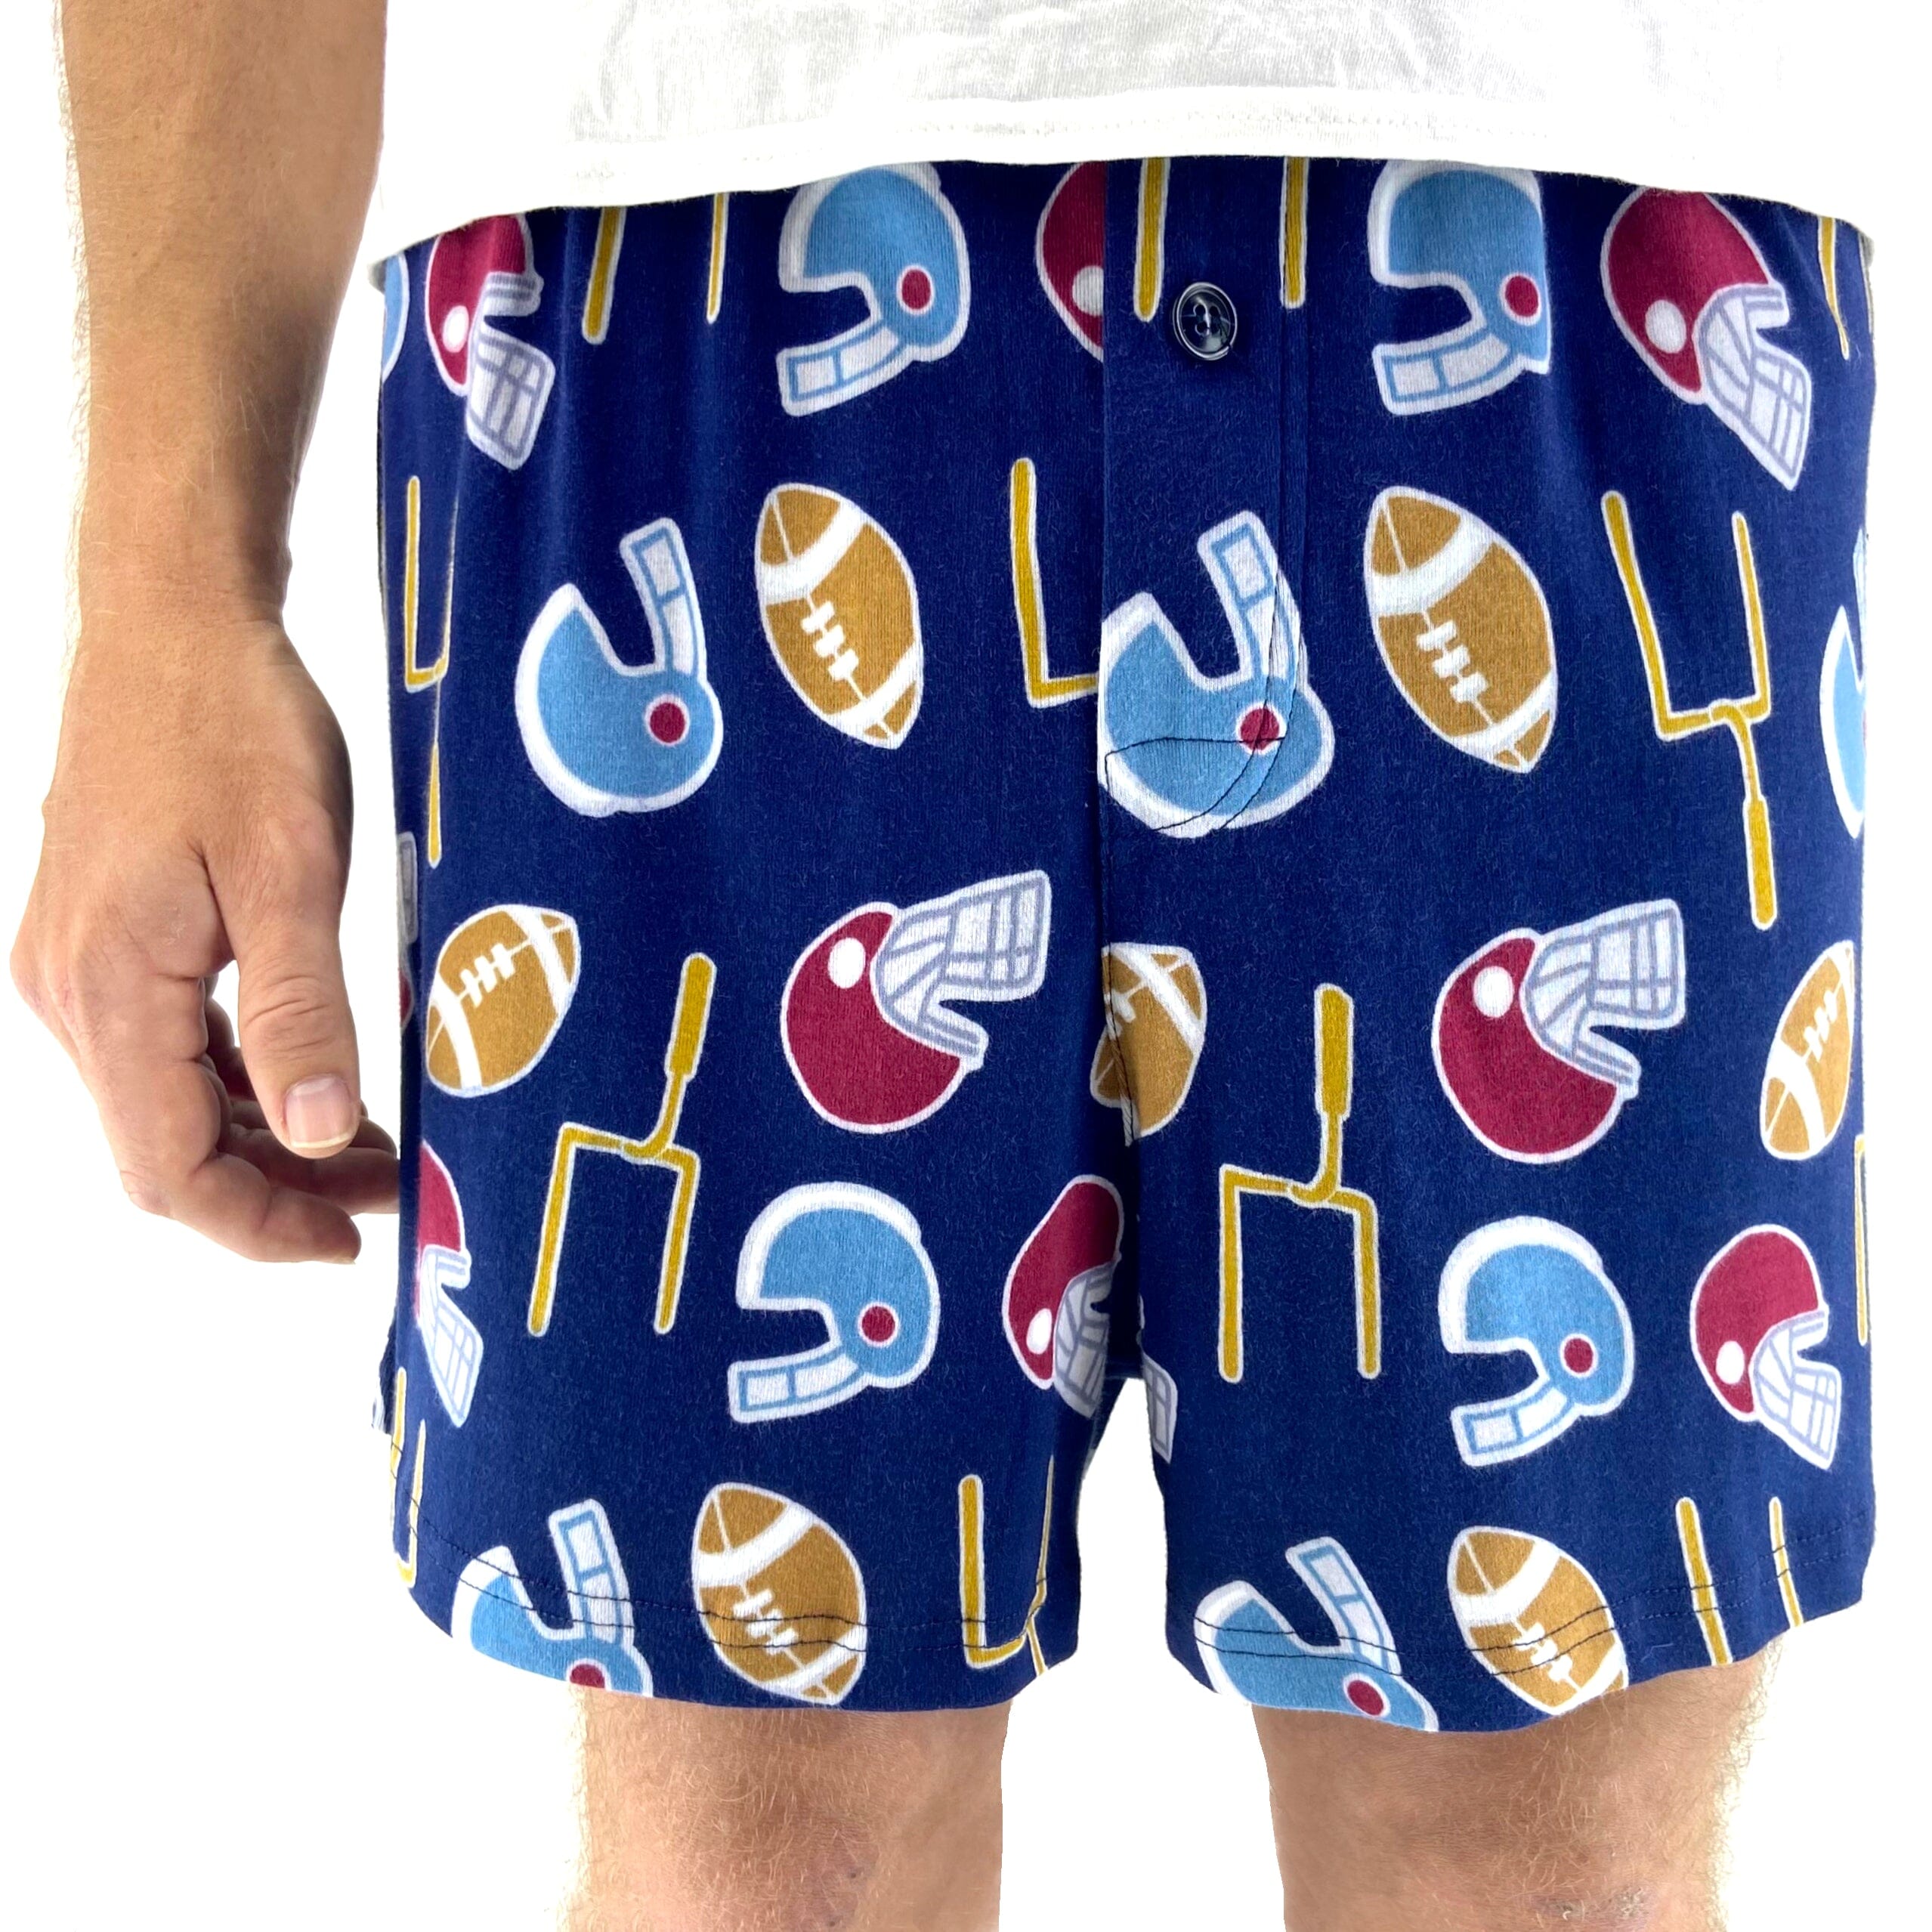 Men's Comfy Sport Themed Football Helmet Patterned Cotton Pajama Shorts